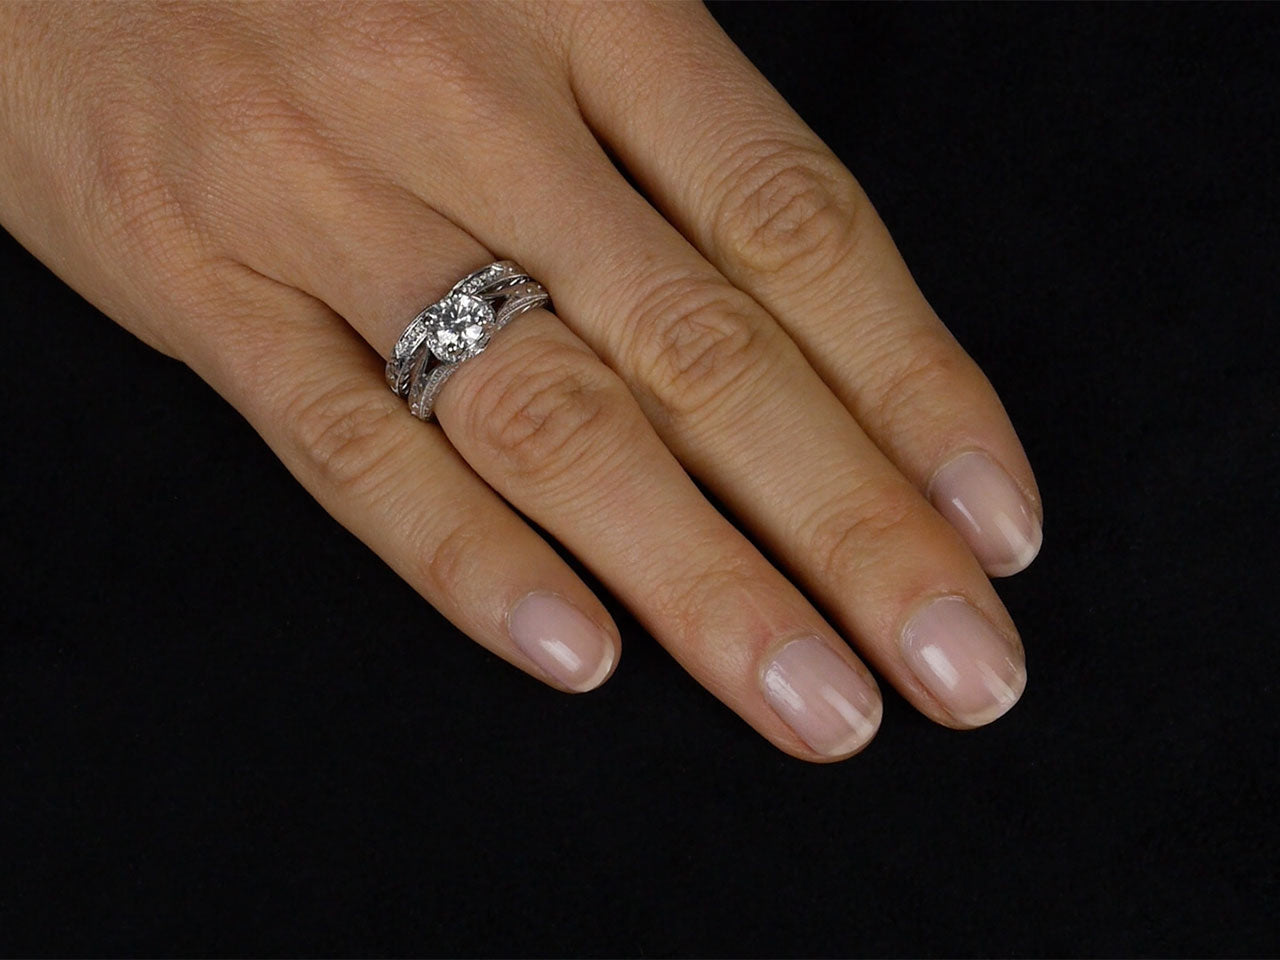 Diamond Ring, 0.73 carat, and Wedding Band in 14K White Gold, by Neil Lane